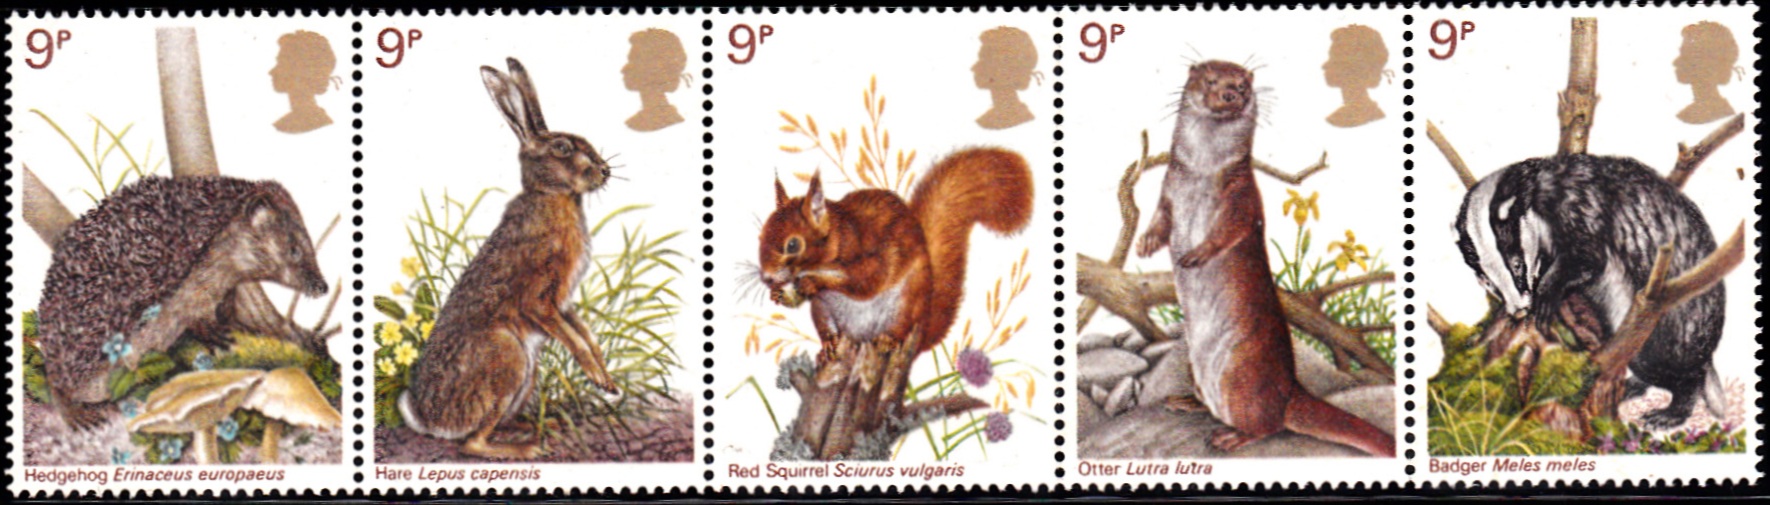 816-820 Wildlife Protection [England Setenant Stamp 1977]